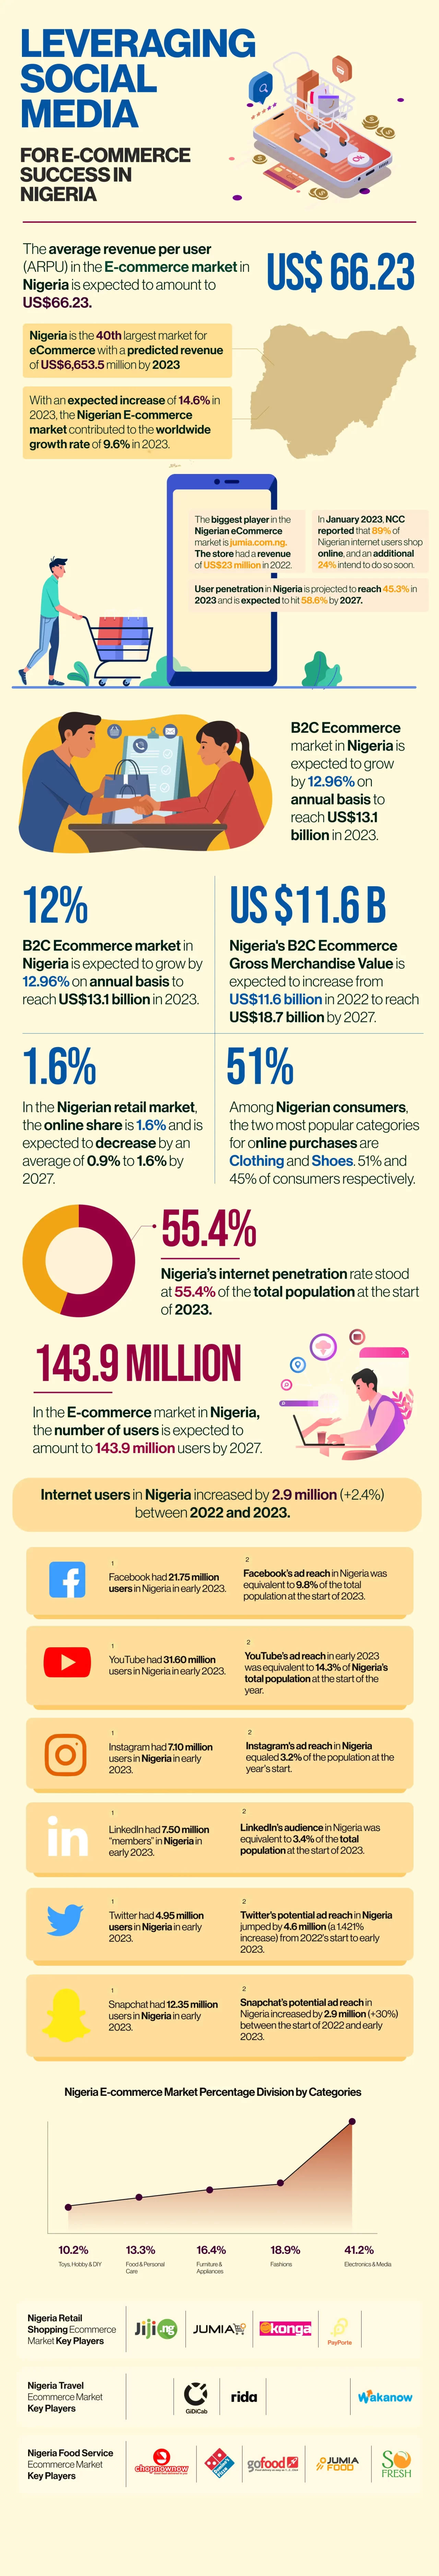 Leveraging Social Media in Nigeria